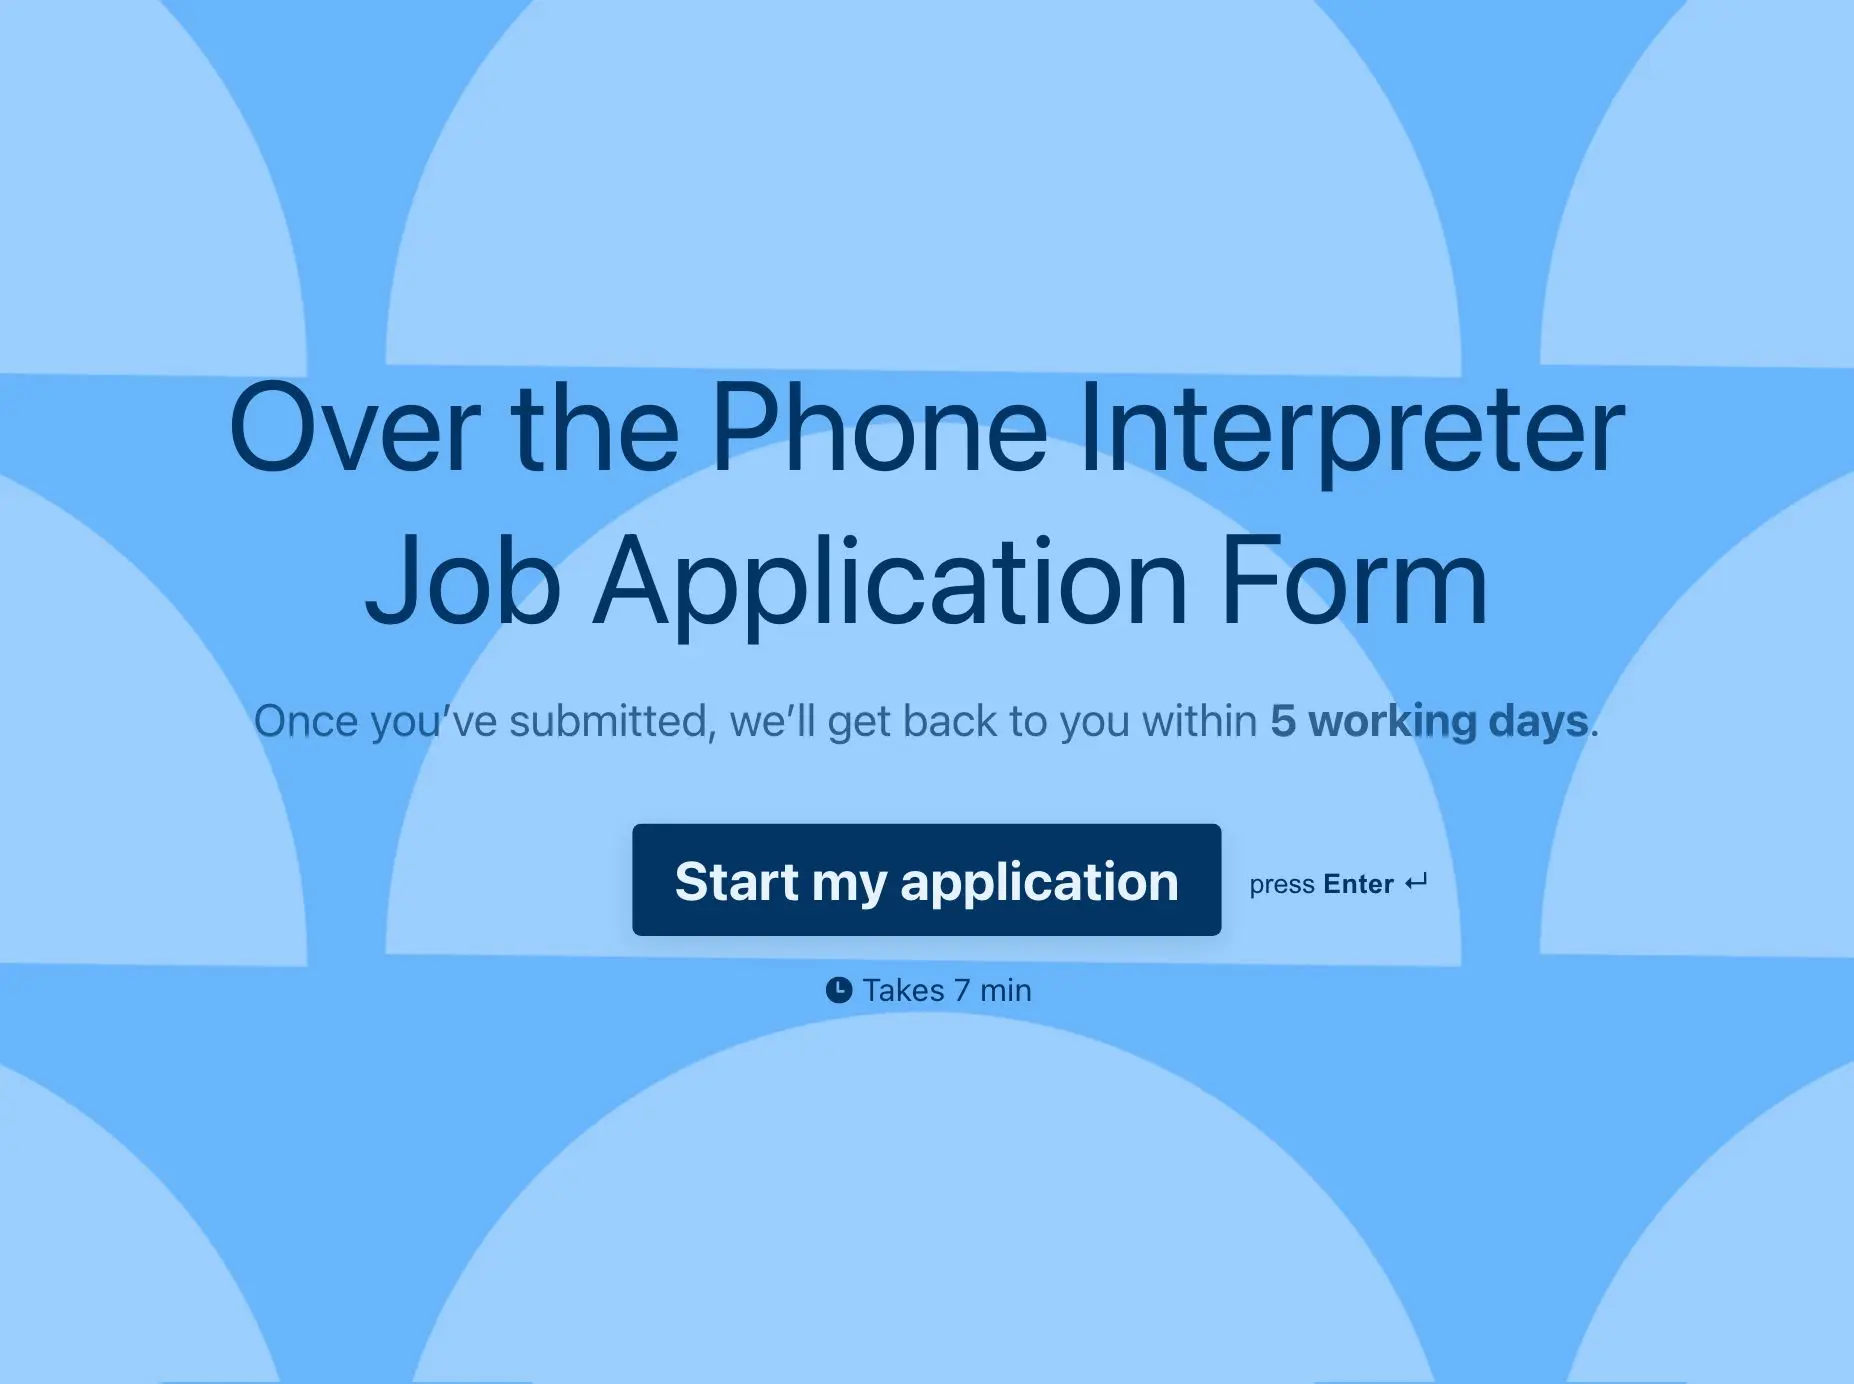 Over the Phone Interpreter Job Application Form Template Hero